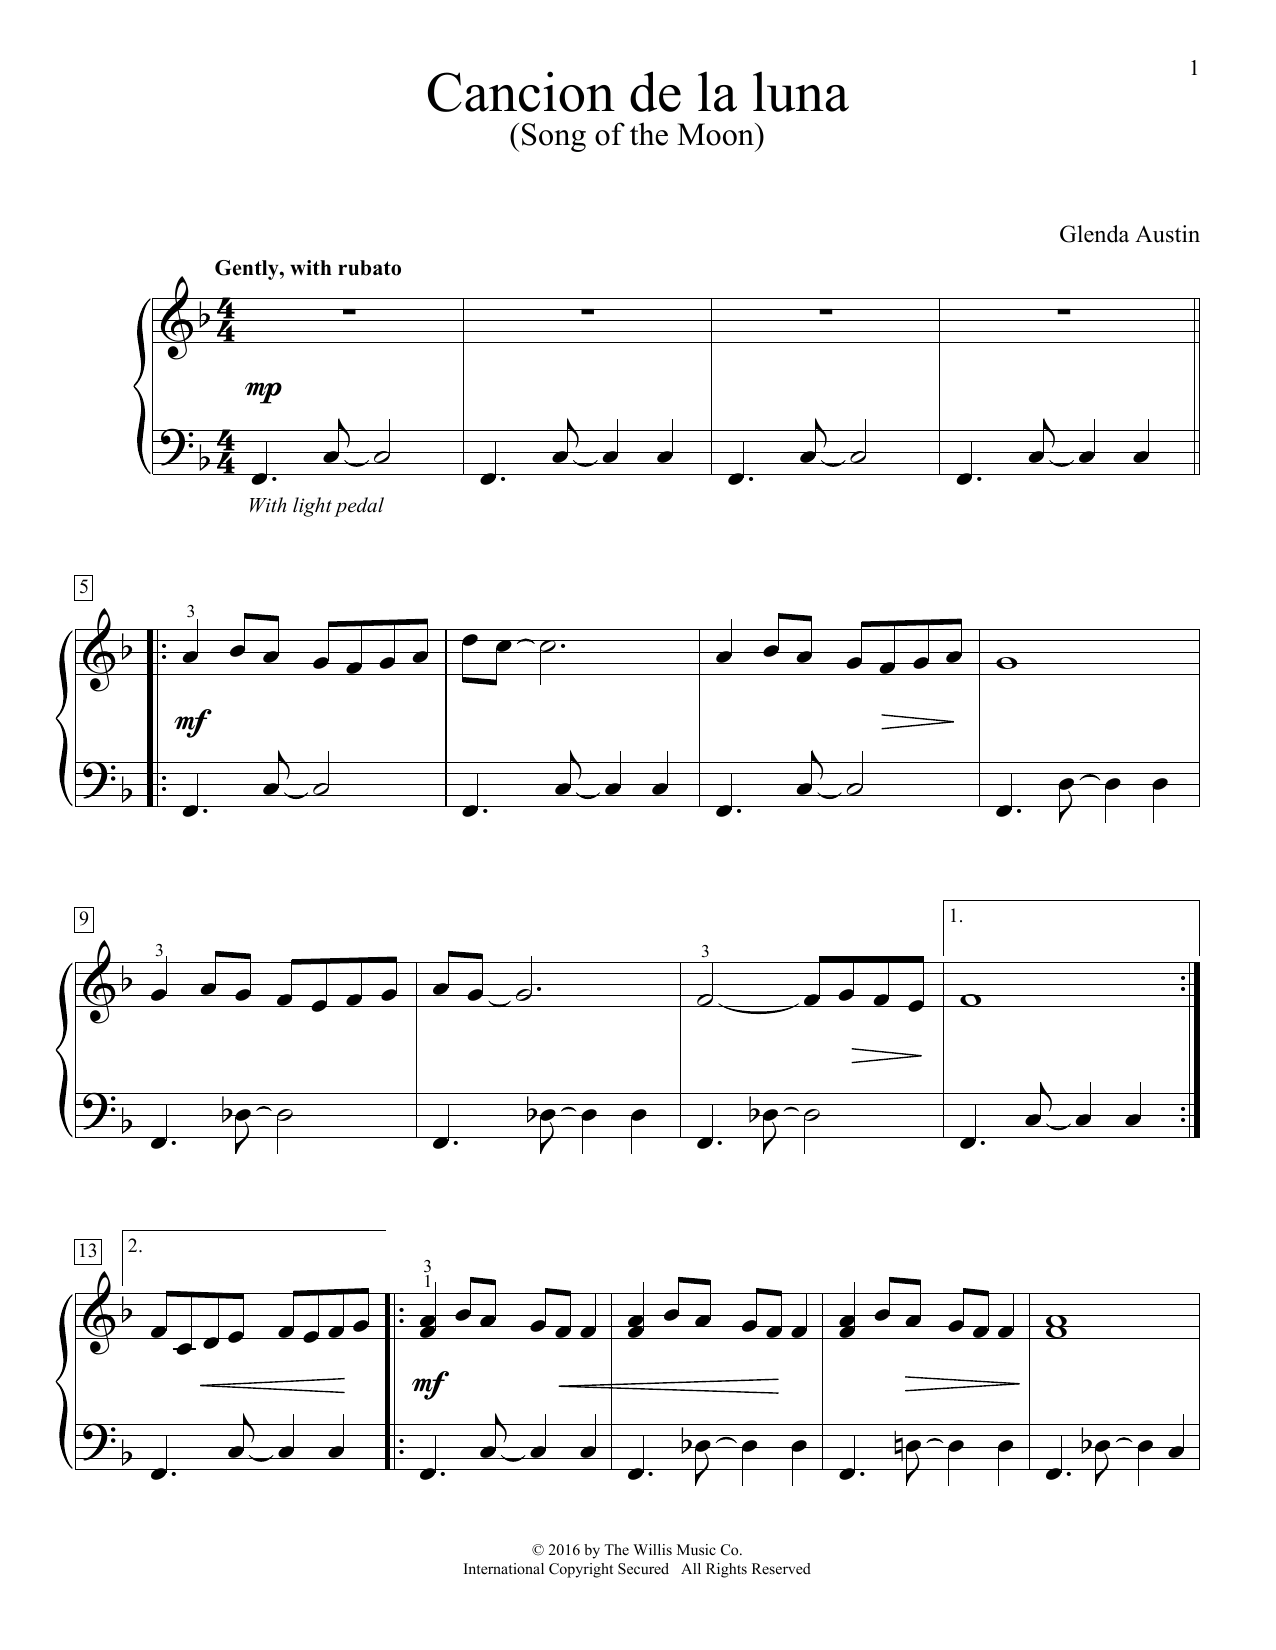 Download Glenda Austin Cancion De La Luna Sheet Music and learn how to play Piano PDF digital score in minutes